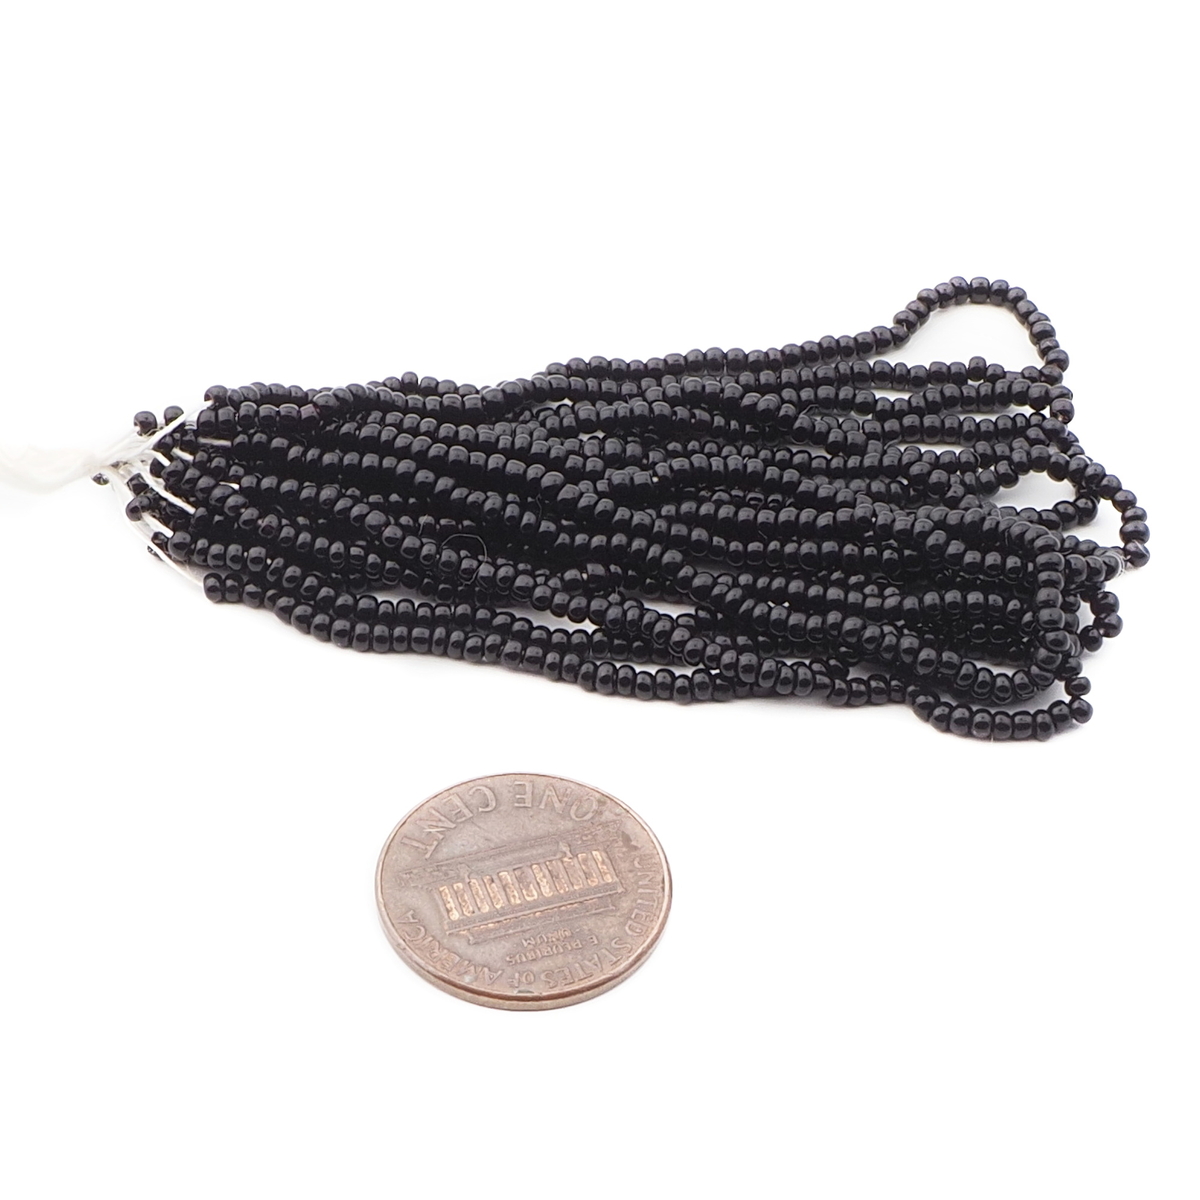 Hank (900) Vintage Czech black seed beads 19 beads per inch